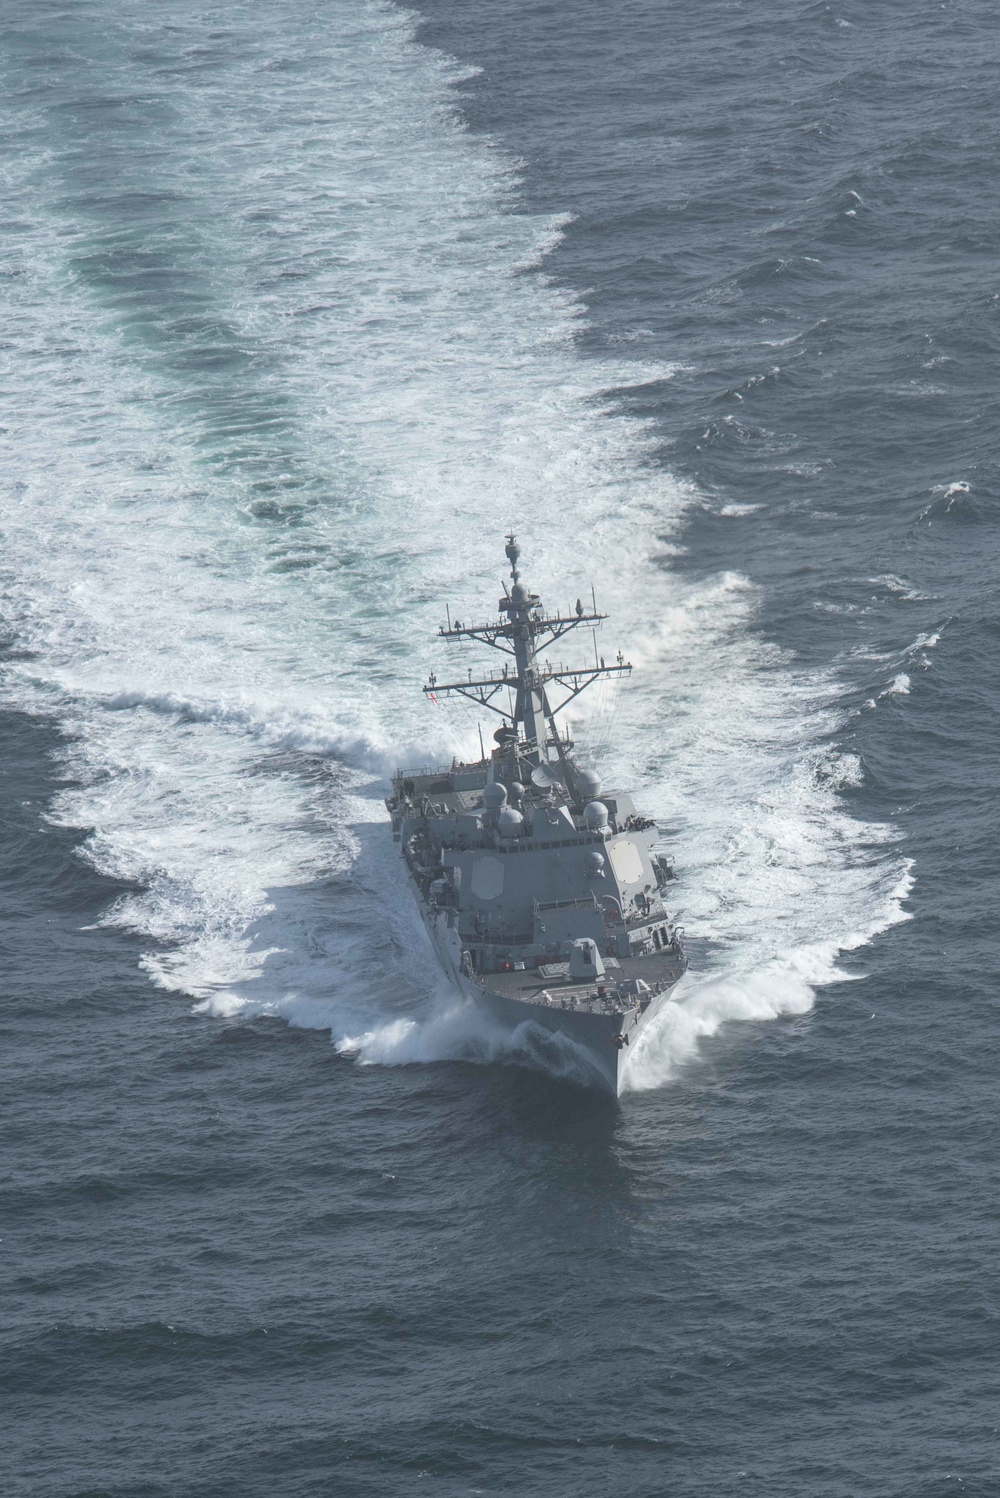 The guided-missile destroyer USS Stockdale (DDG 106) transits the Strait of Hormuz